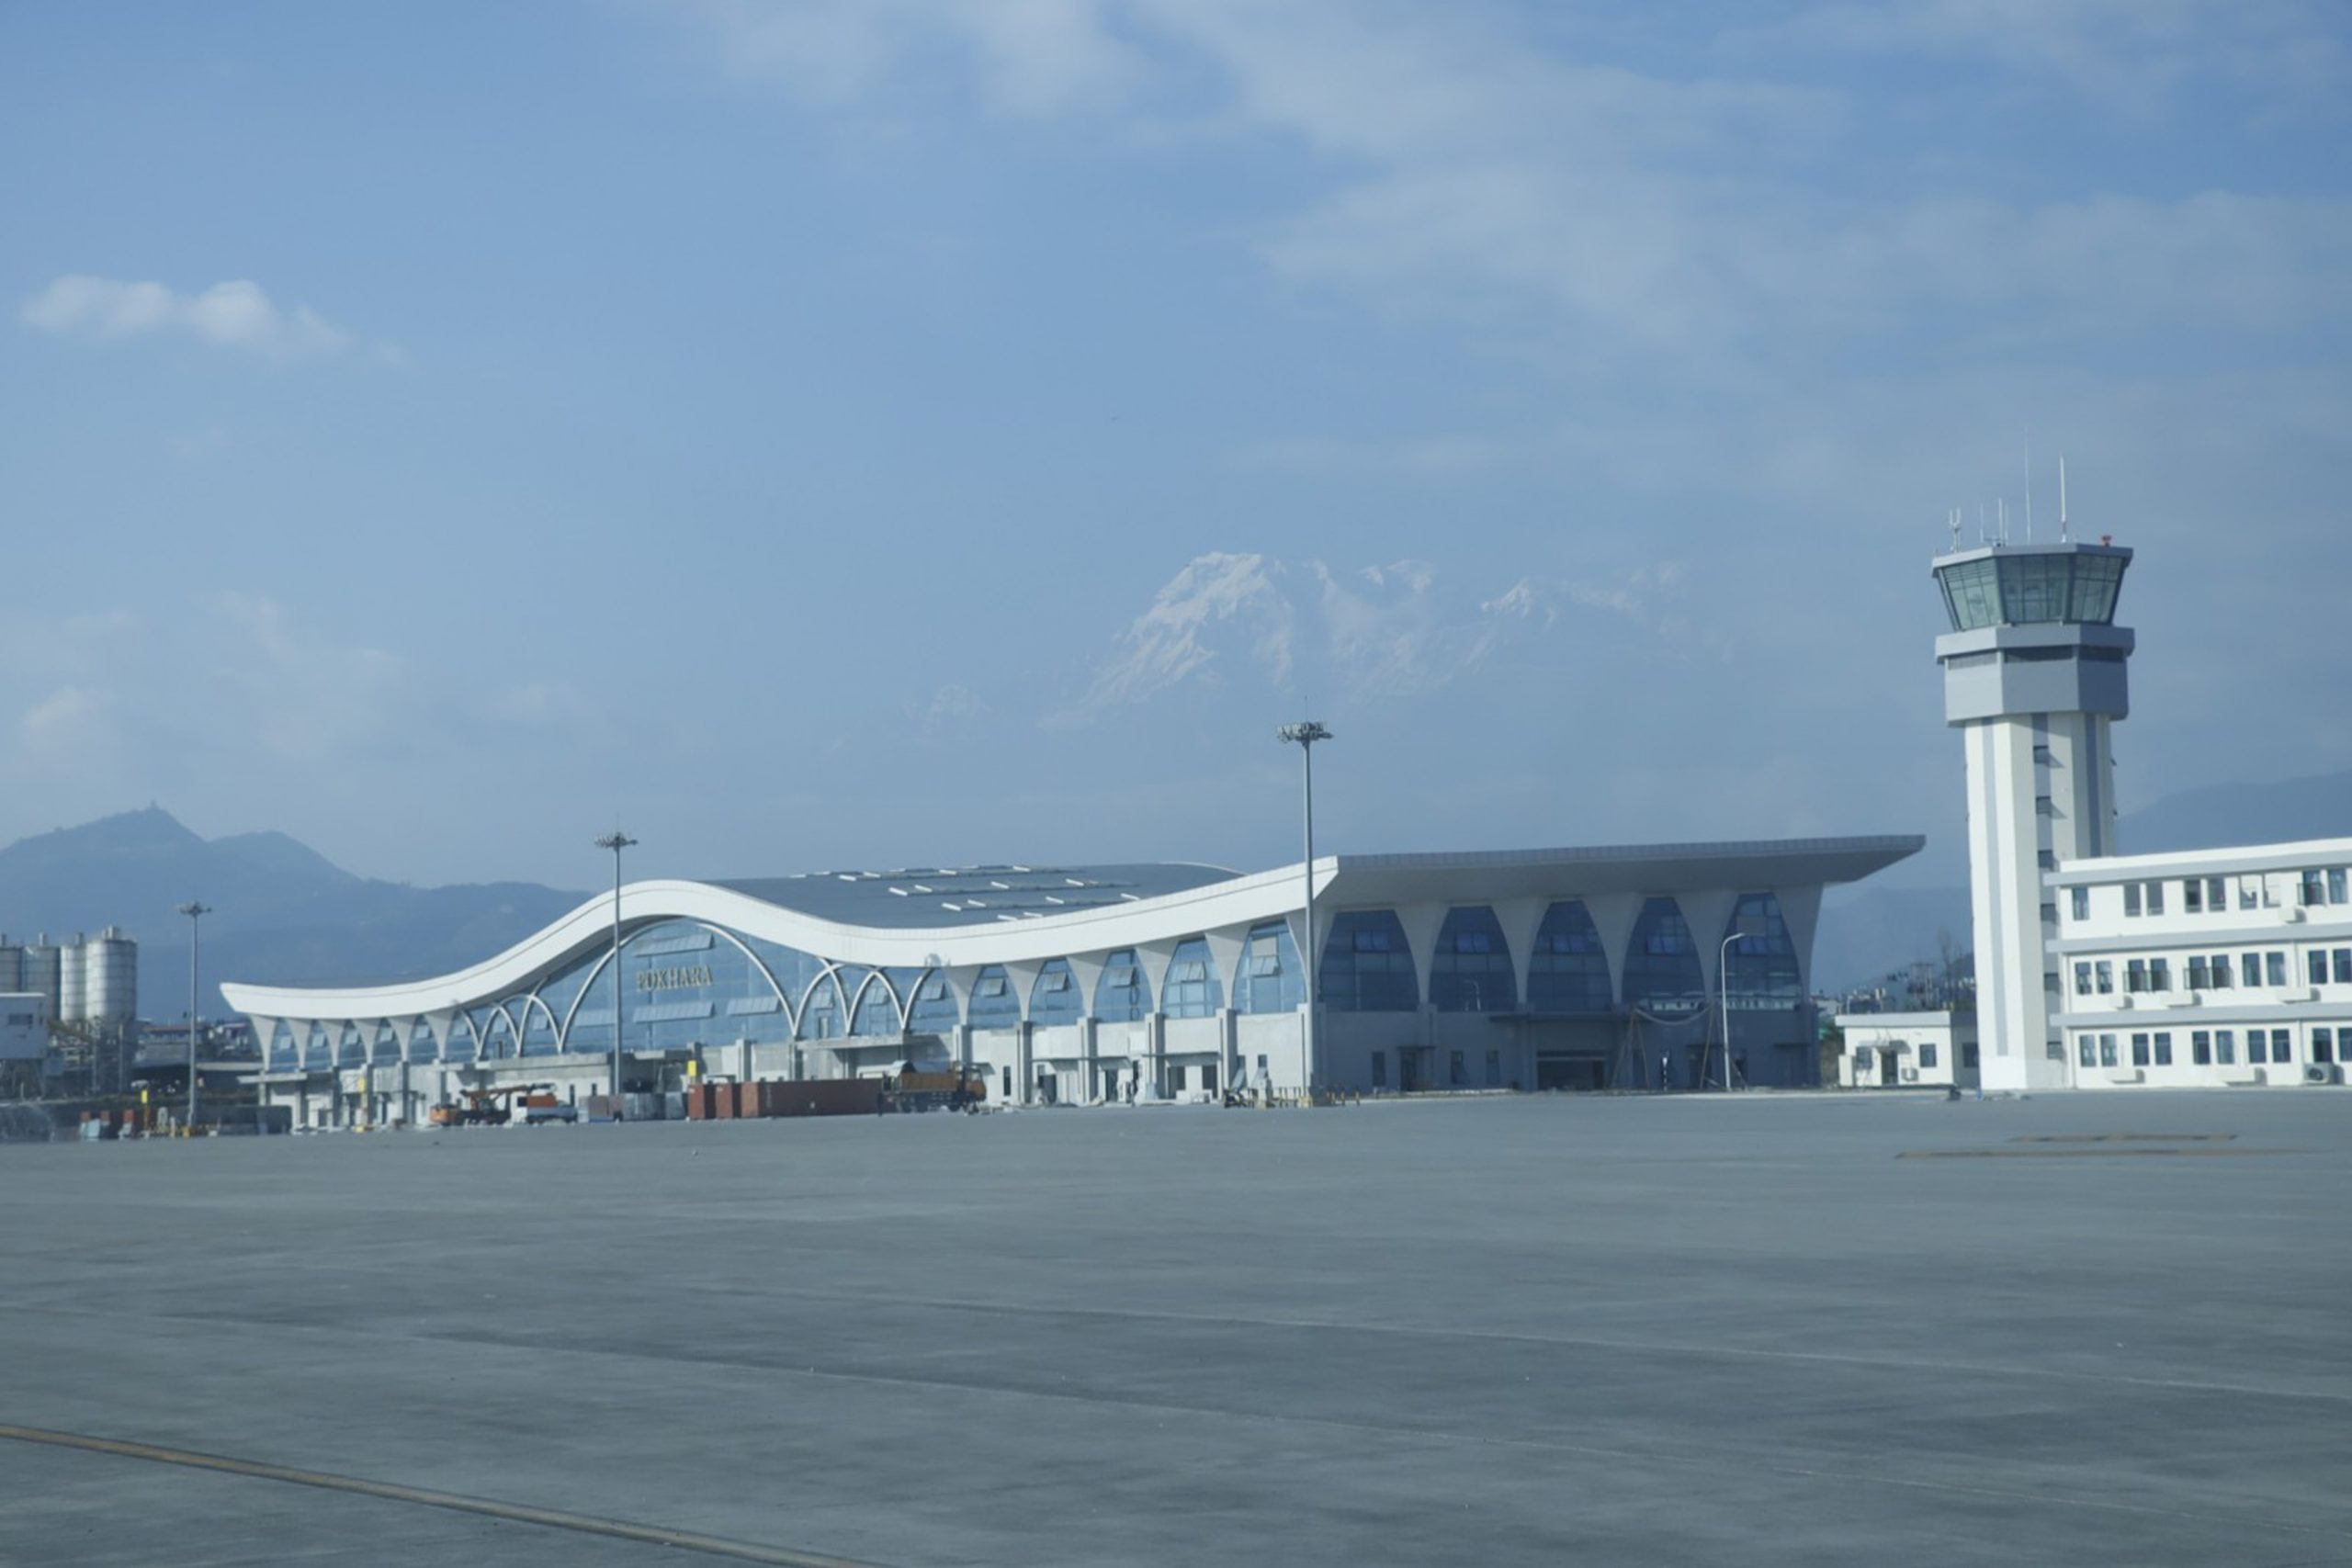 Calibration flight at Gautam Buddha Int’l Airport scheduled on February 21